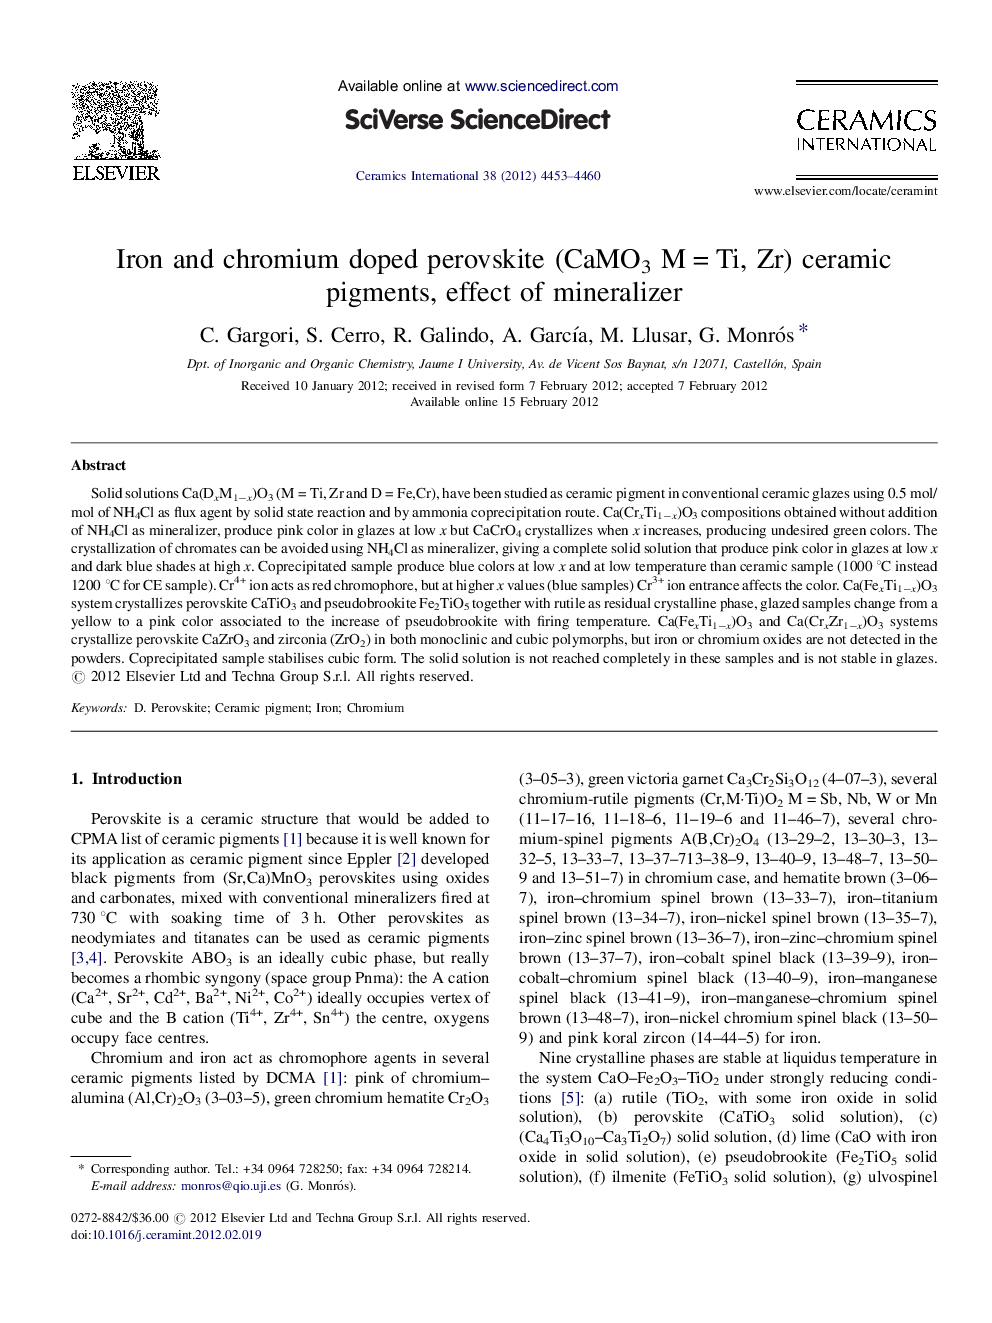 Iron and chromium doped perovskite (CaMO3 M = Ti, Zr) ceramic pigments, effect of mineralizer